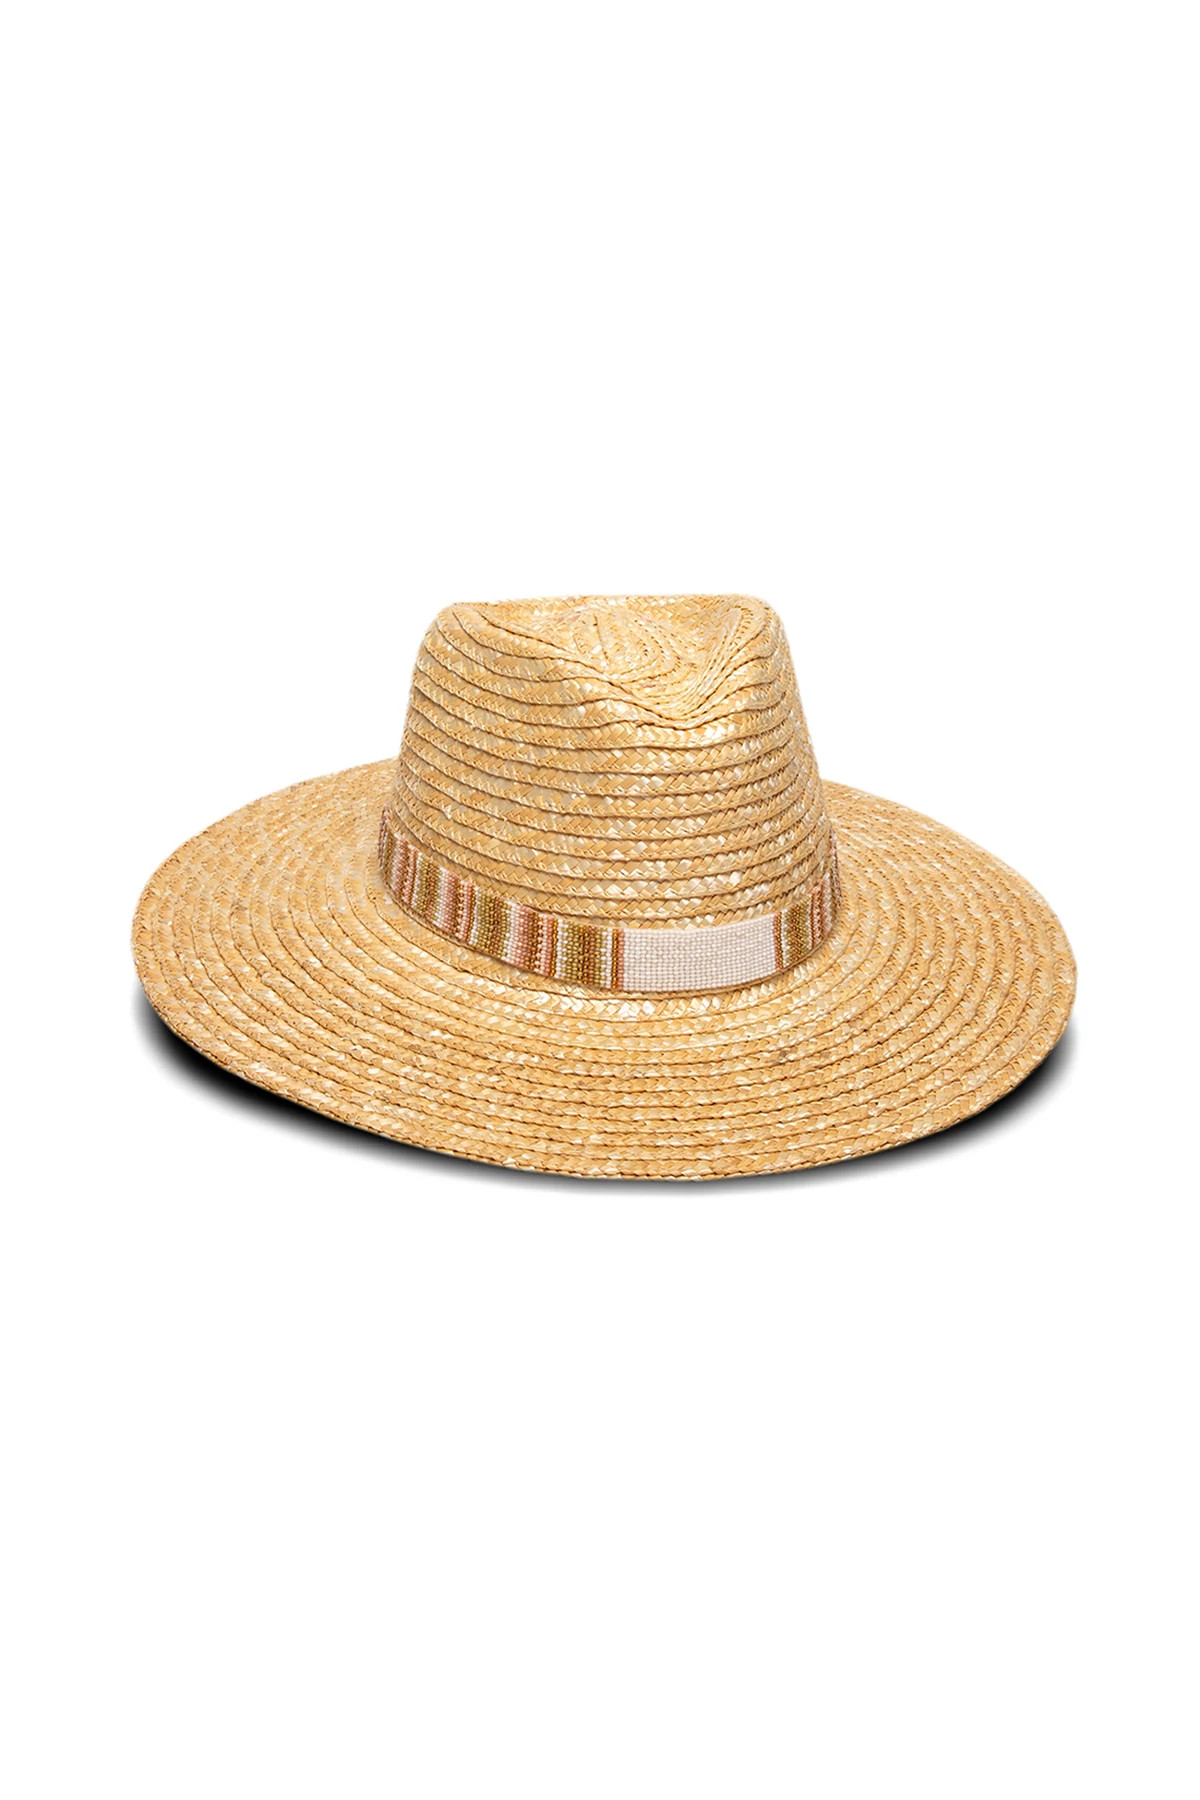 NATURAL Tulum Beaded Panama Hat image number 1